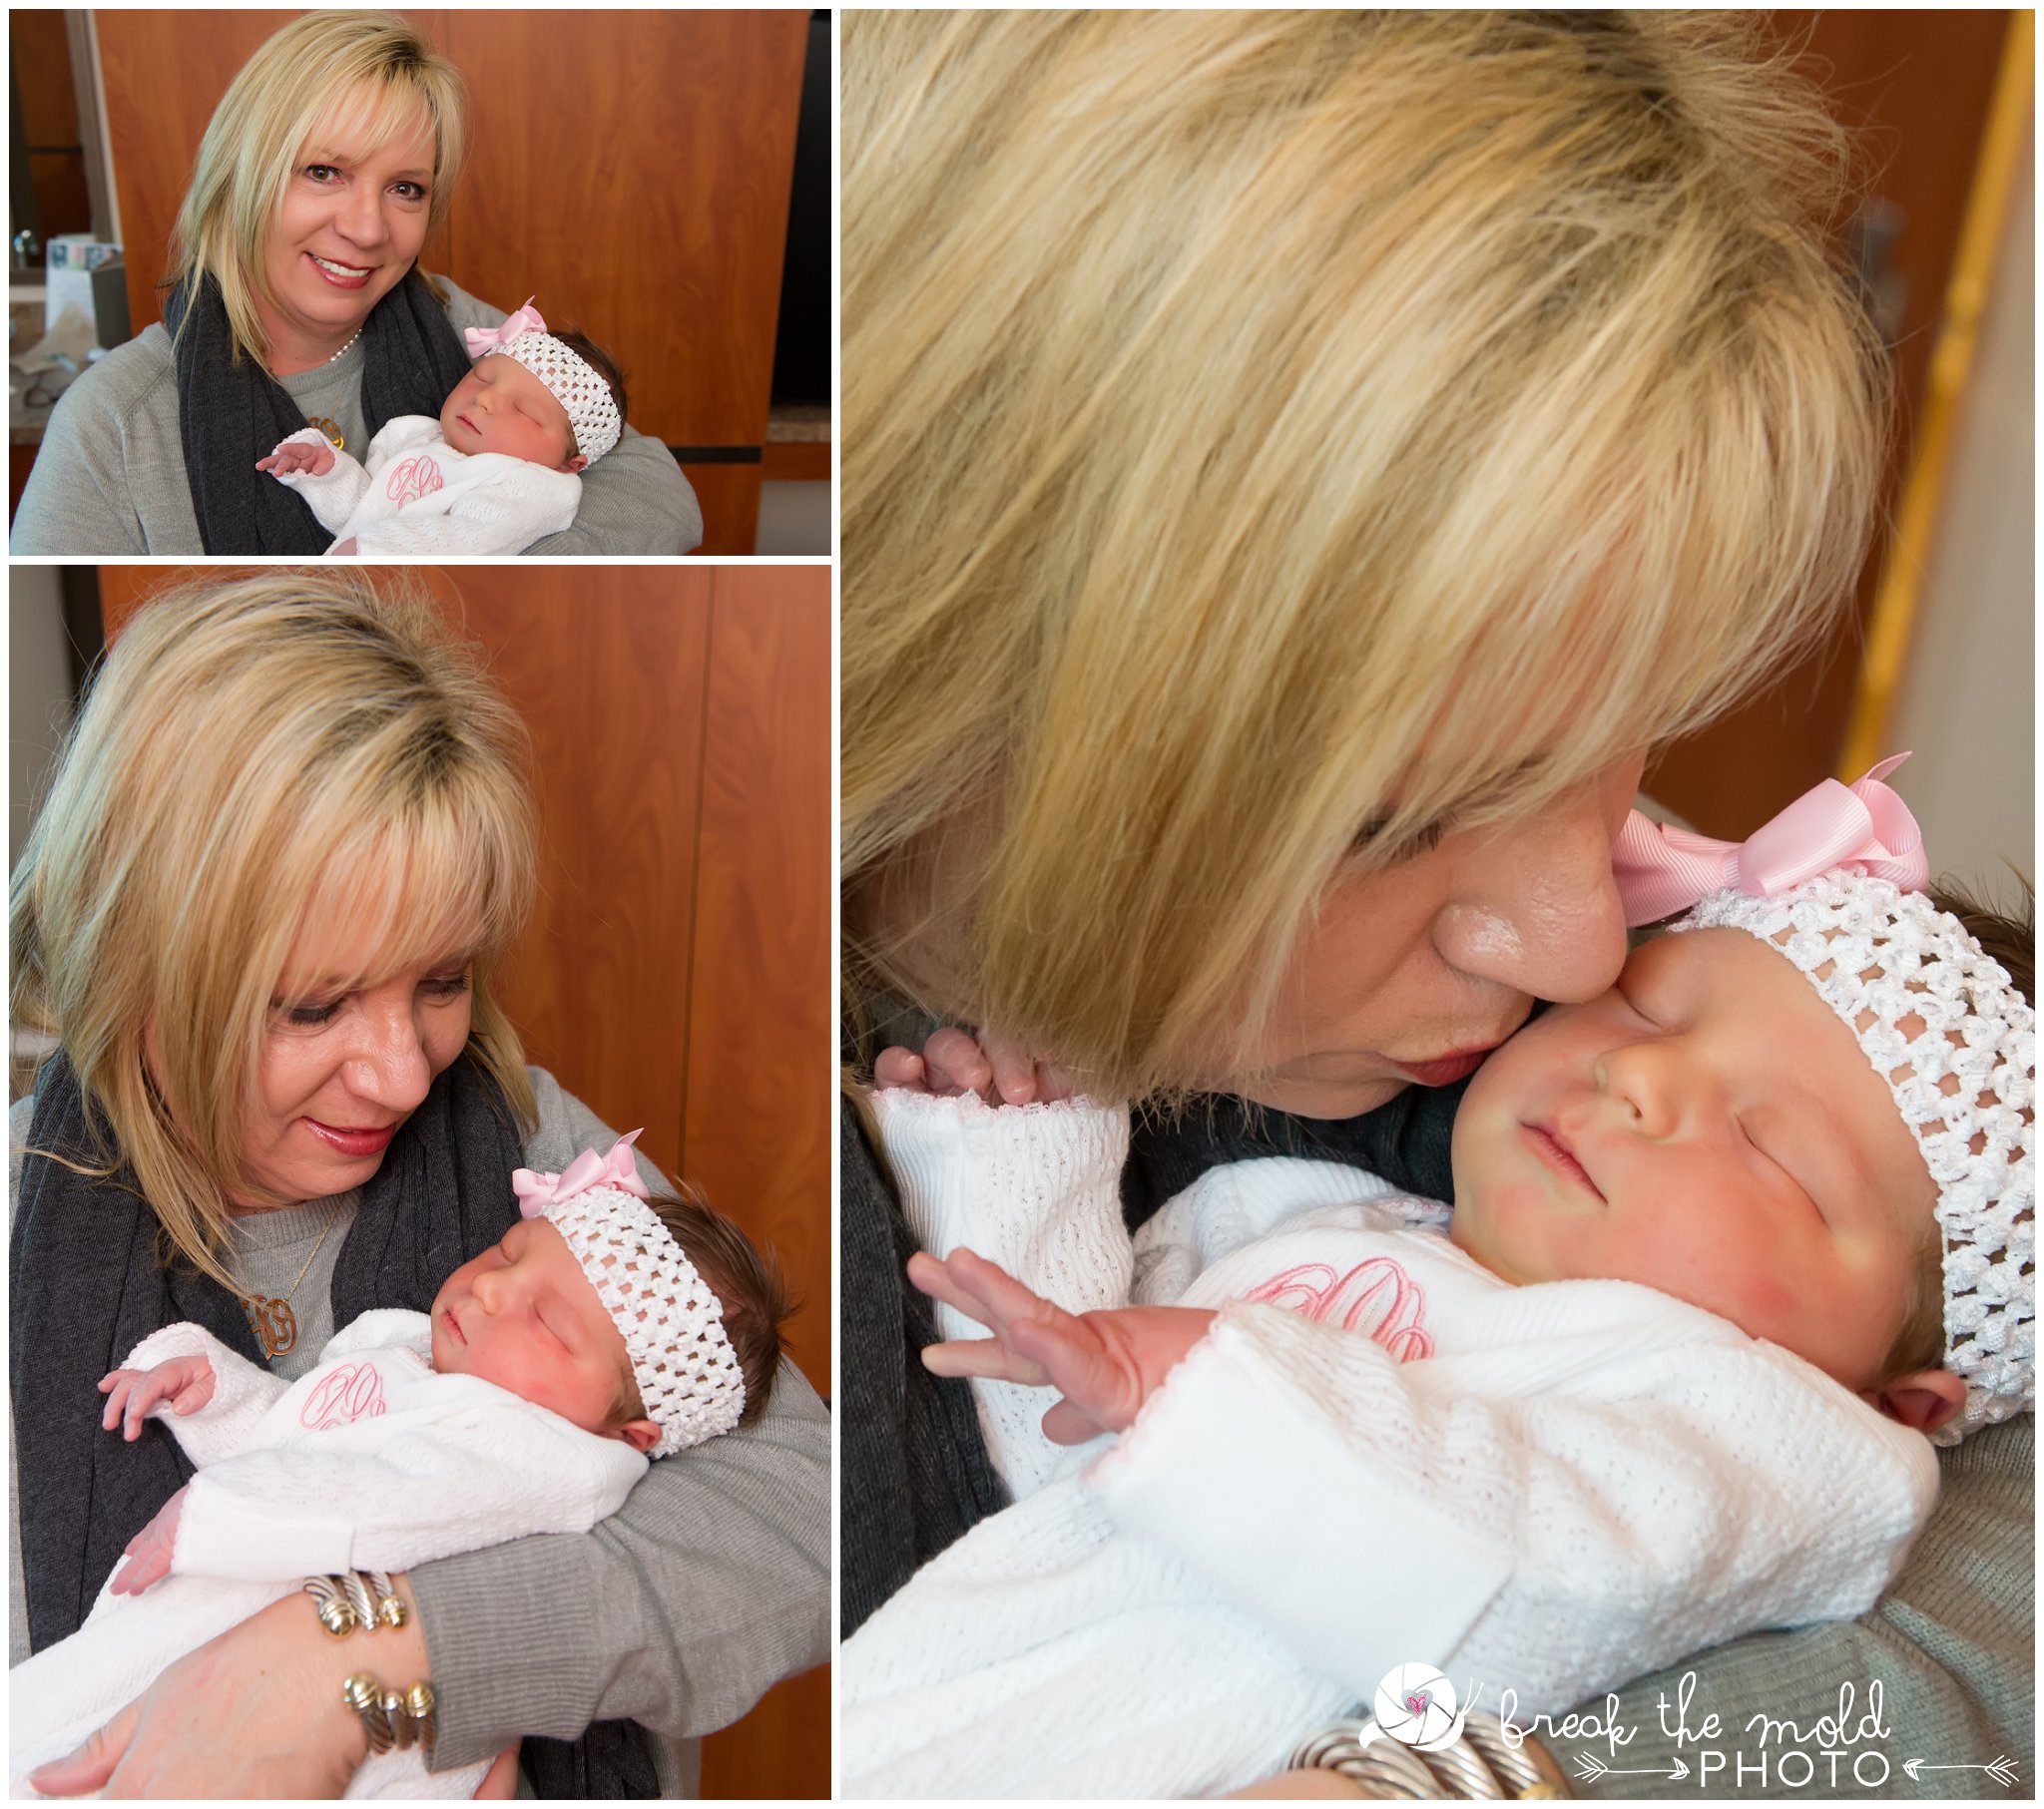 fresh-24-newborn-in-hospital-break-the-mold-photo-baby-girl-sweet-in-room-photos (35).jpg